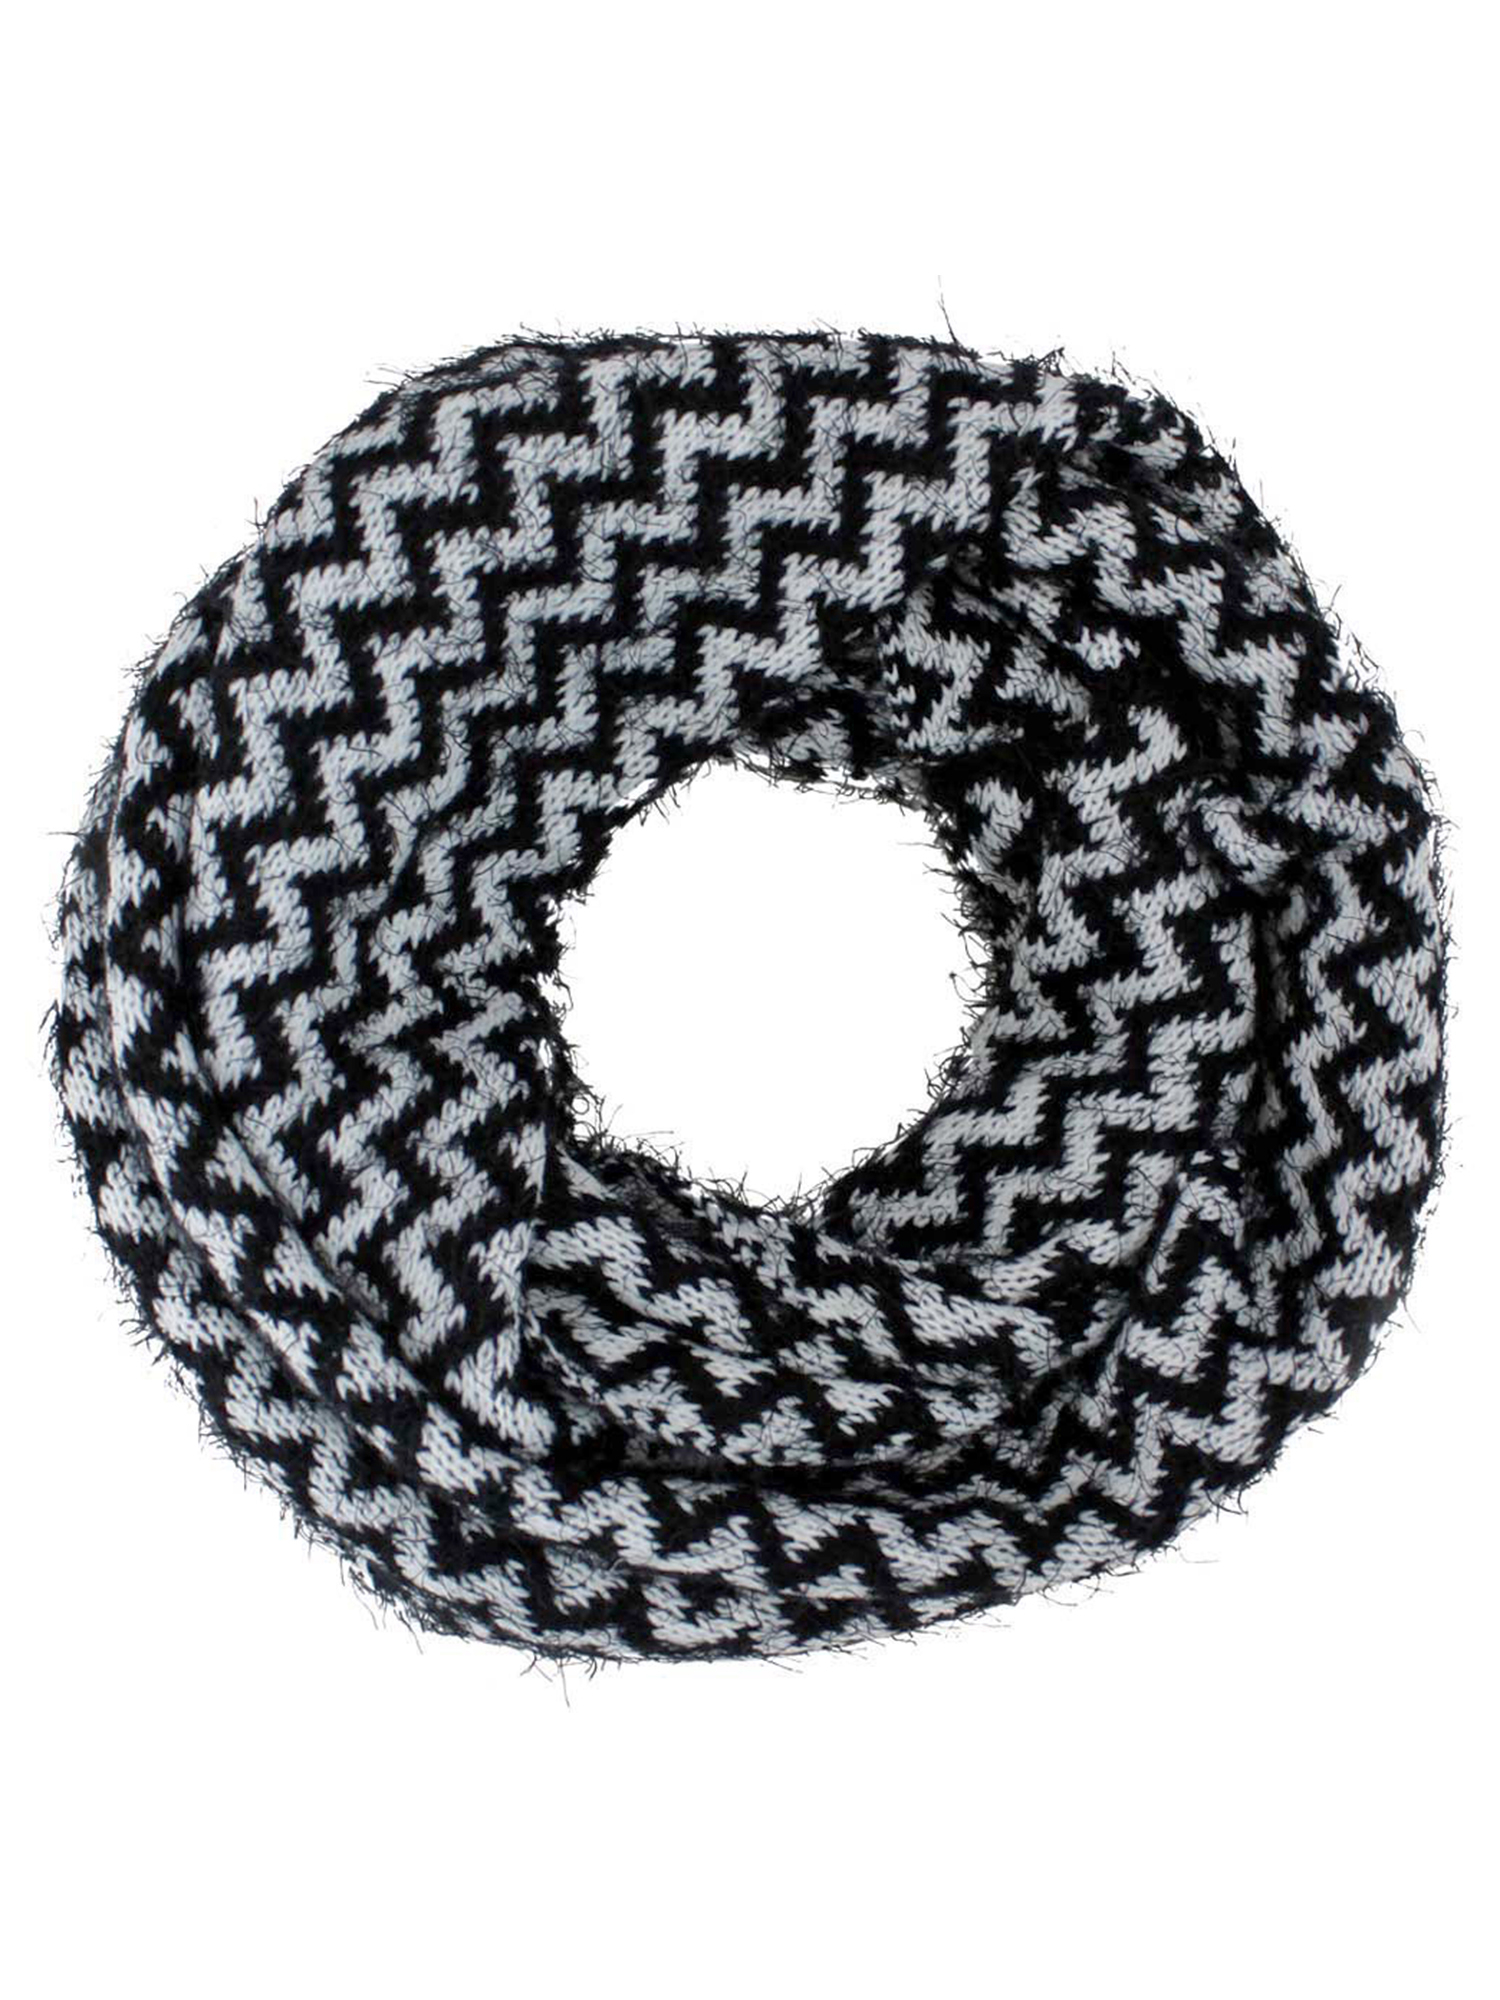 Chevron Infinity Scarf Knitting Pattern Details About Fuzzy Knit Chevron Infinity Scarf